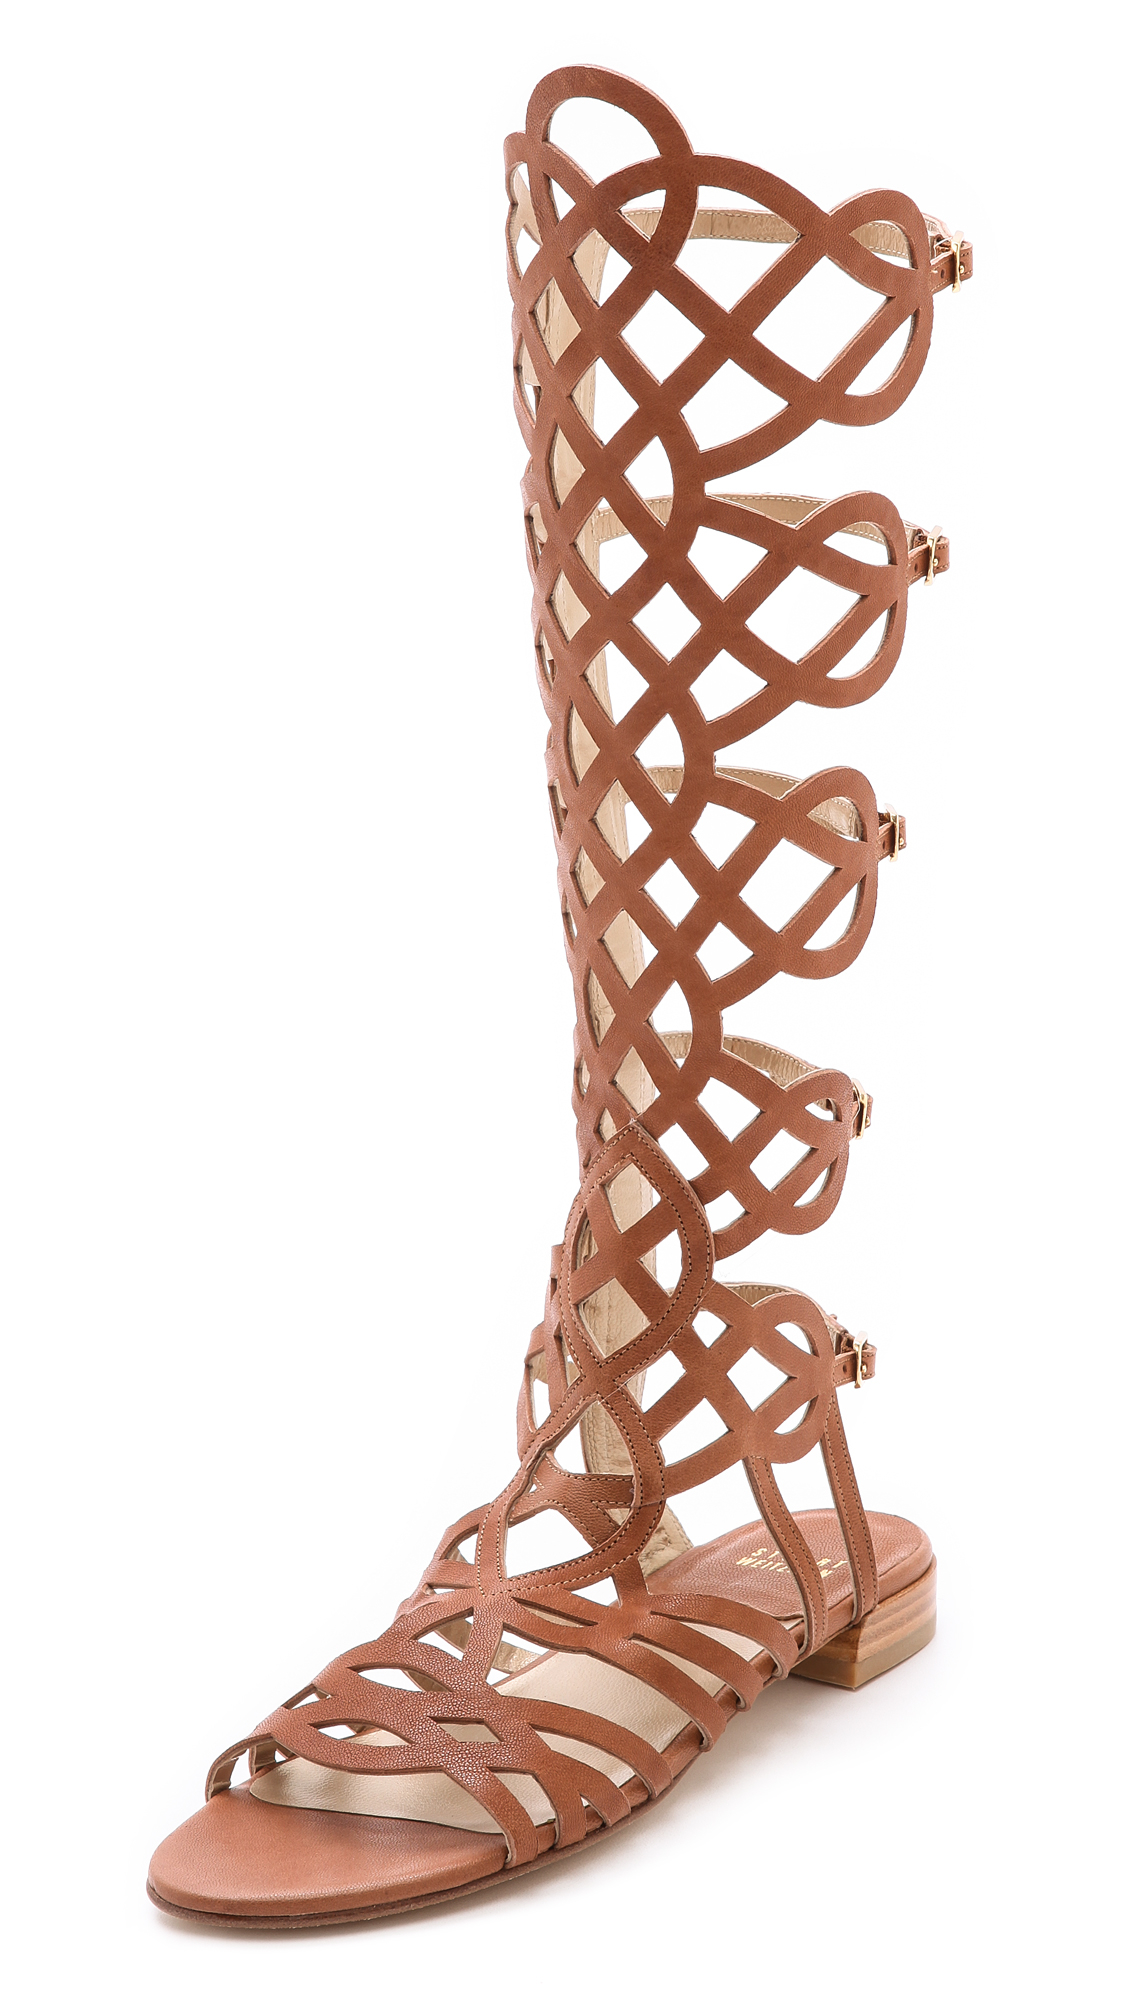 Stuart Weitzman Aphrodite Gladiator Sandals Camel in Brown - Lyst